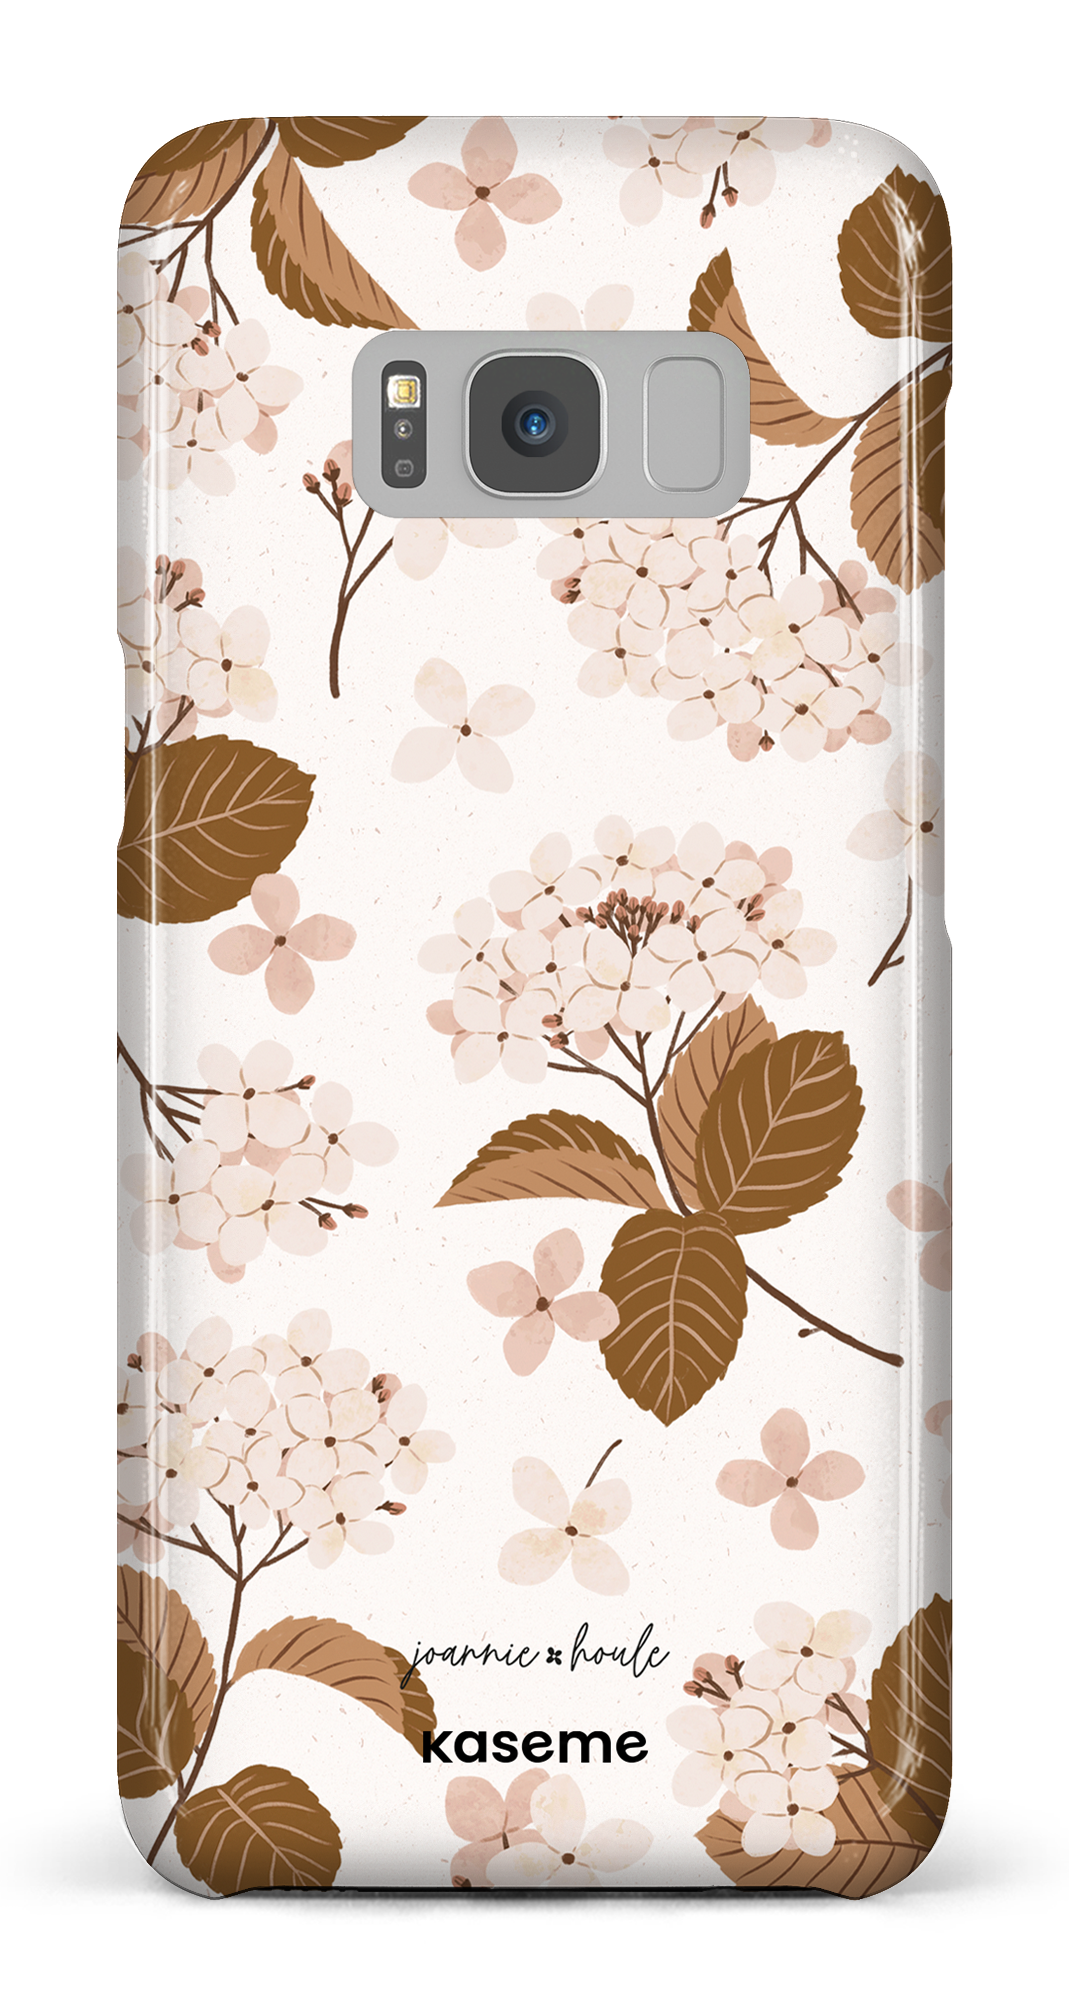 Hydrangeas by Joannie Houle - Galaxy S8